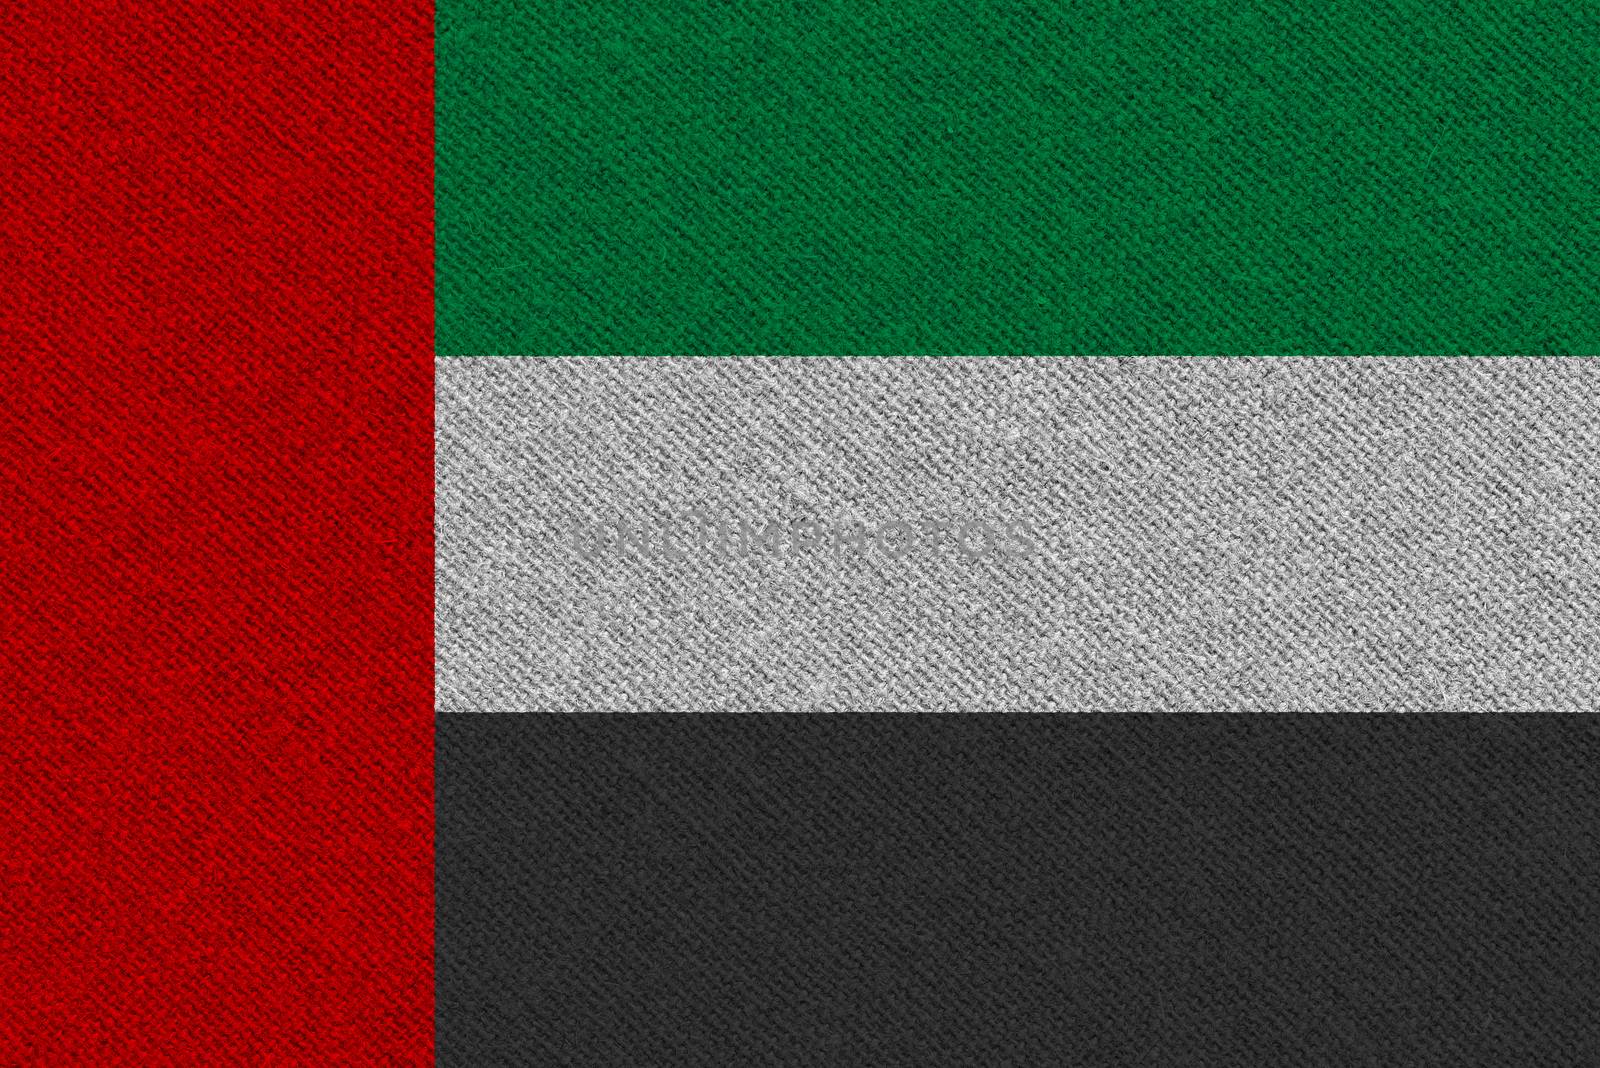 United arab fabric flag. Patriotic background. National flag of United arab